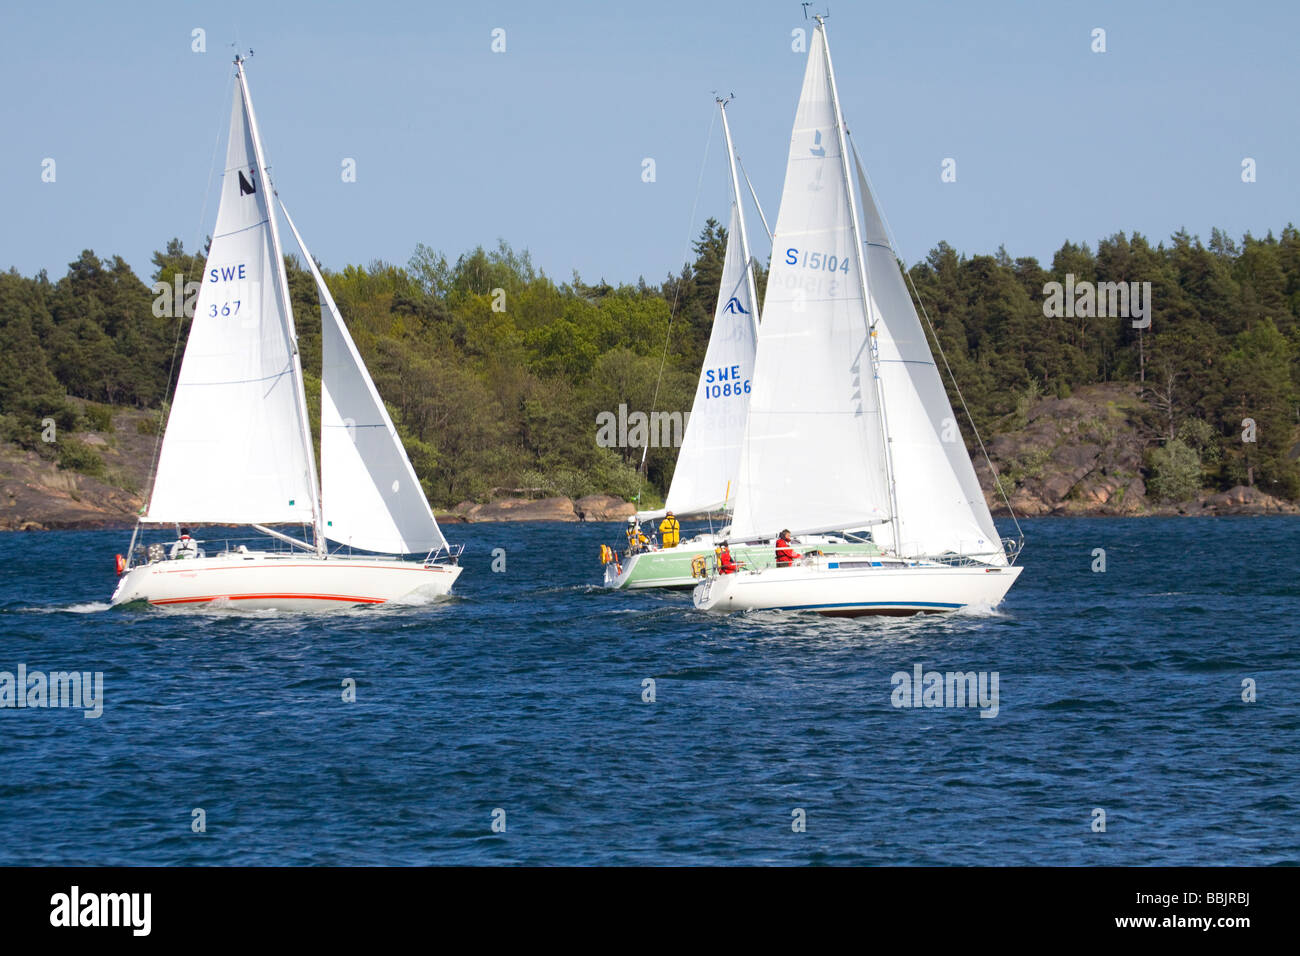 Sailing boat on raceday Stock Photo